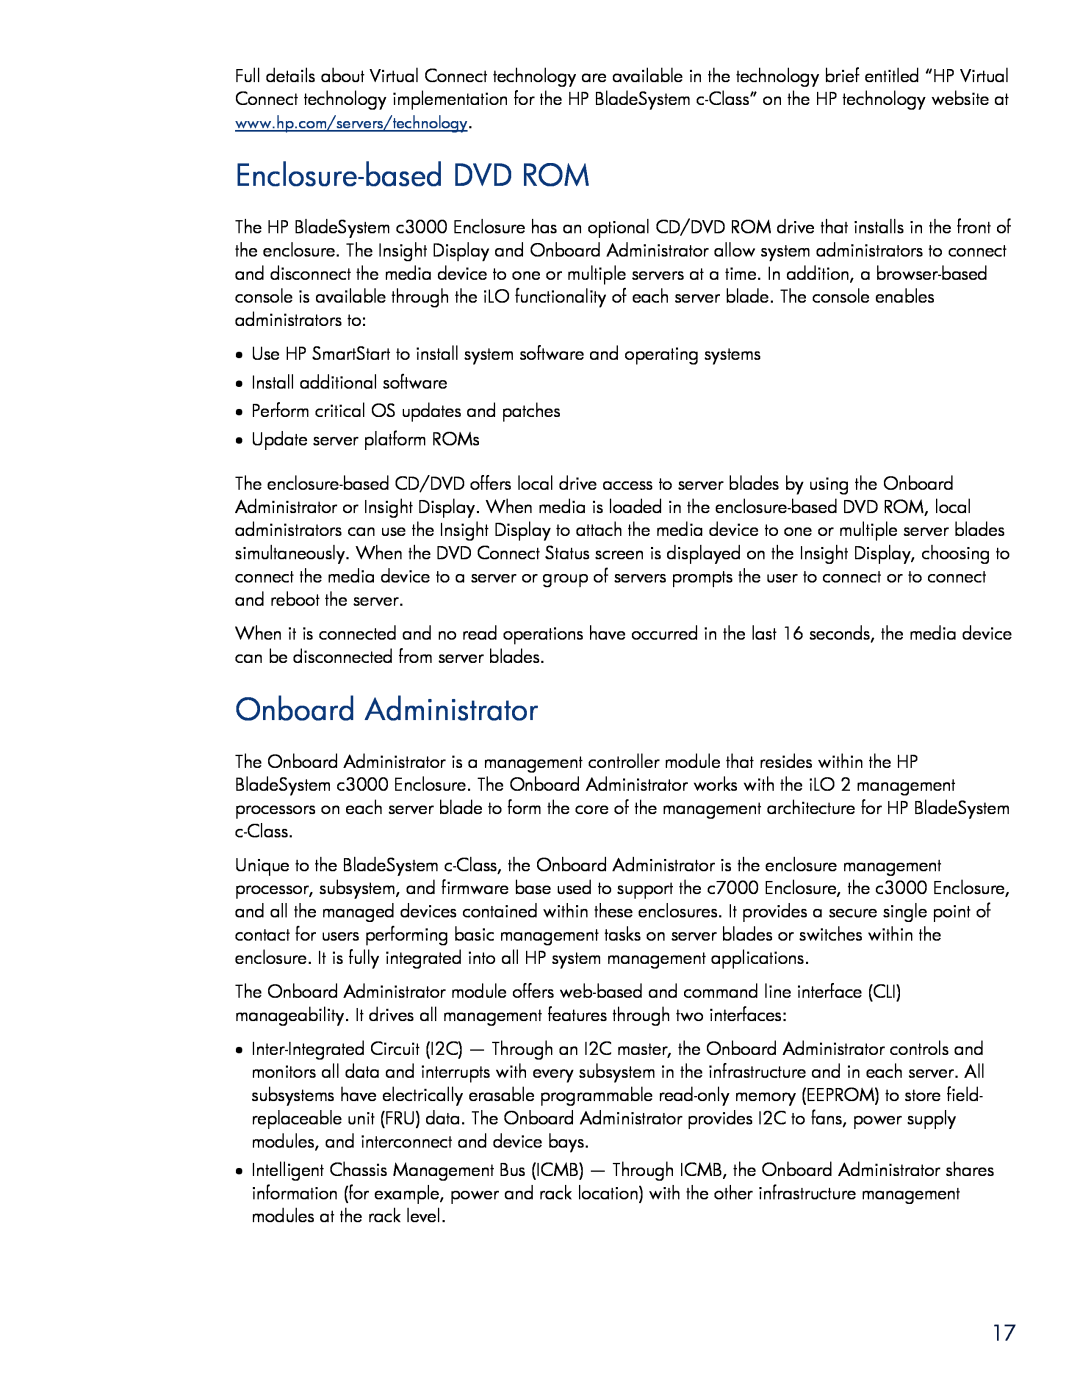 HP BladeSystem Enclosure technologies manual Enclosure-based DVD ROM, Onboard Administrator 